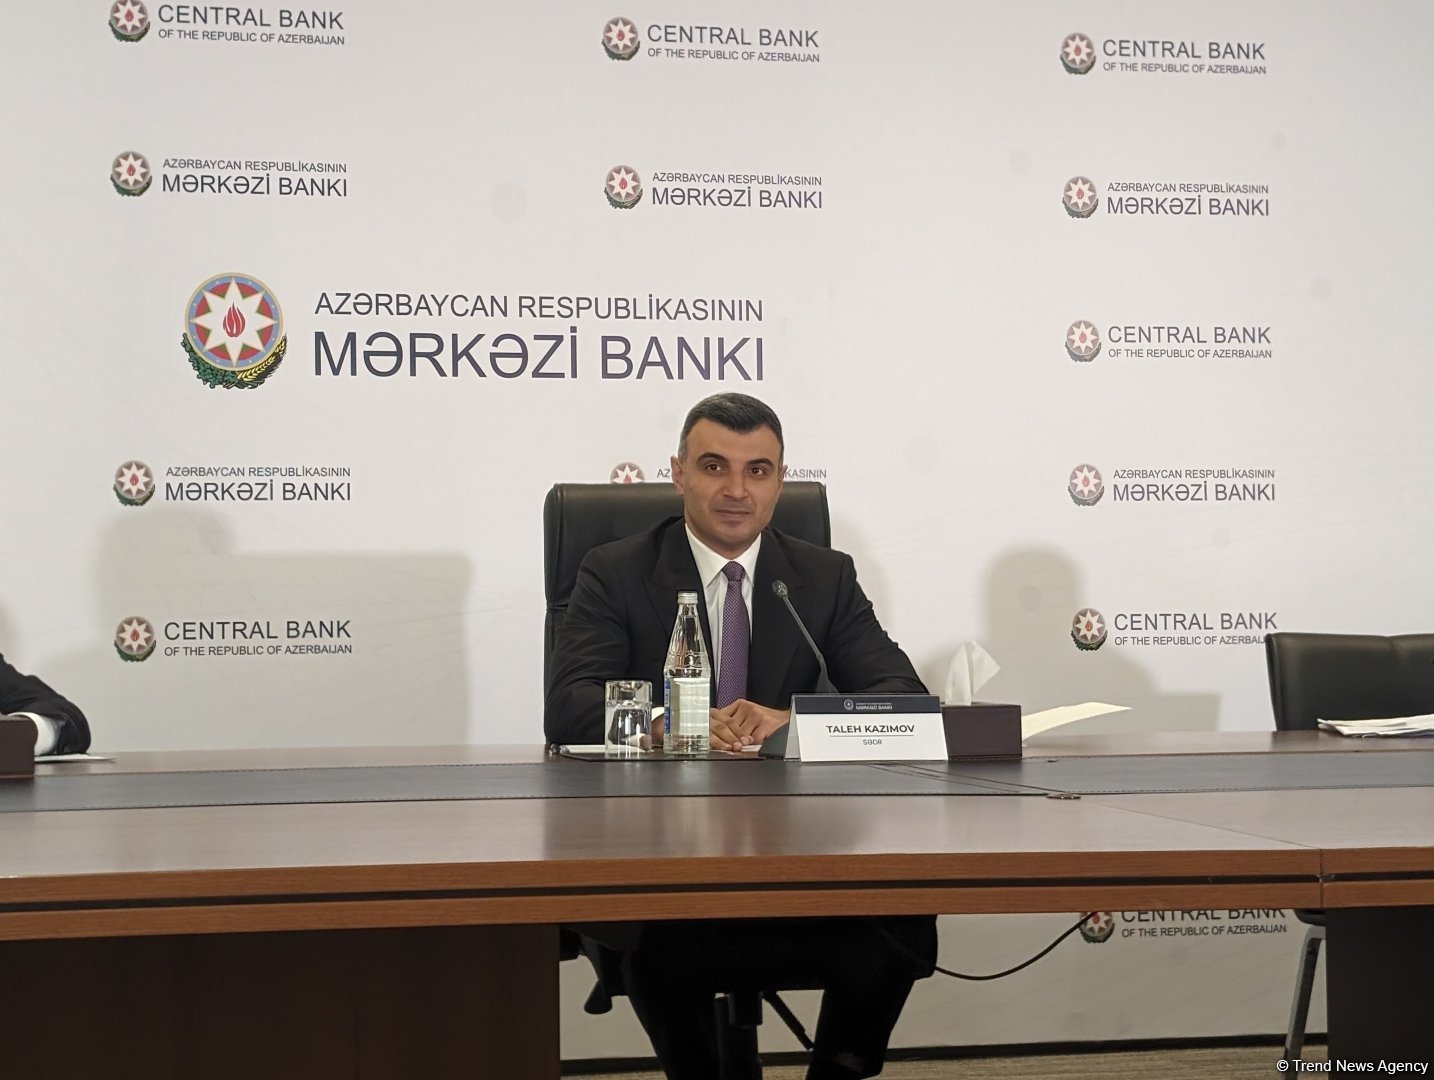 Azerbaijan's Nakhchivan Bank suffers no financial concerns - CBA's chairman